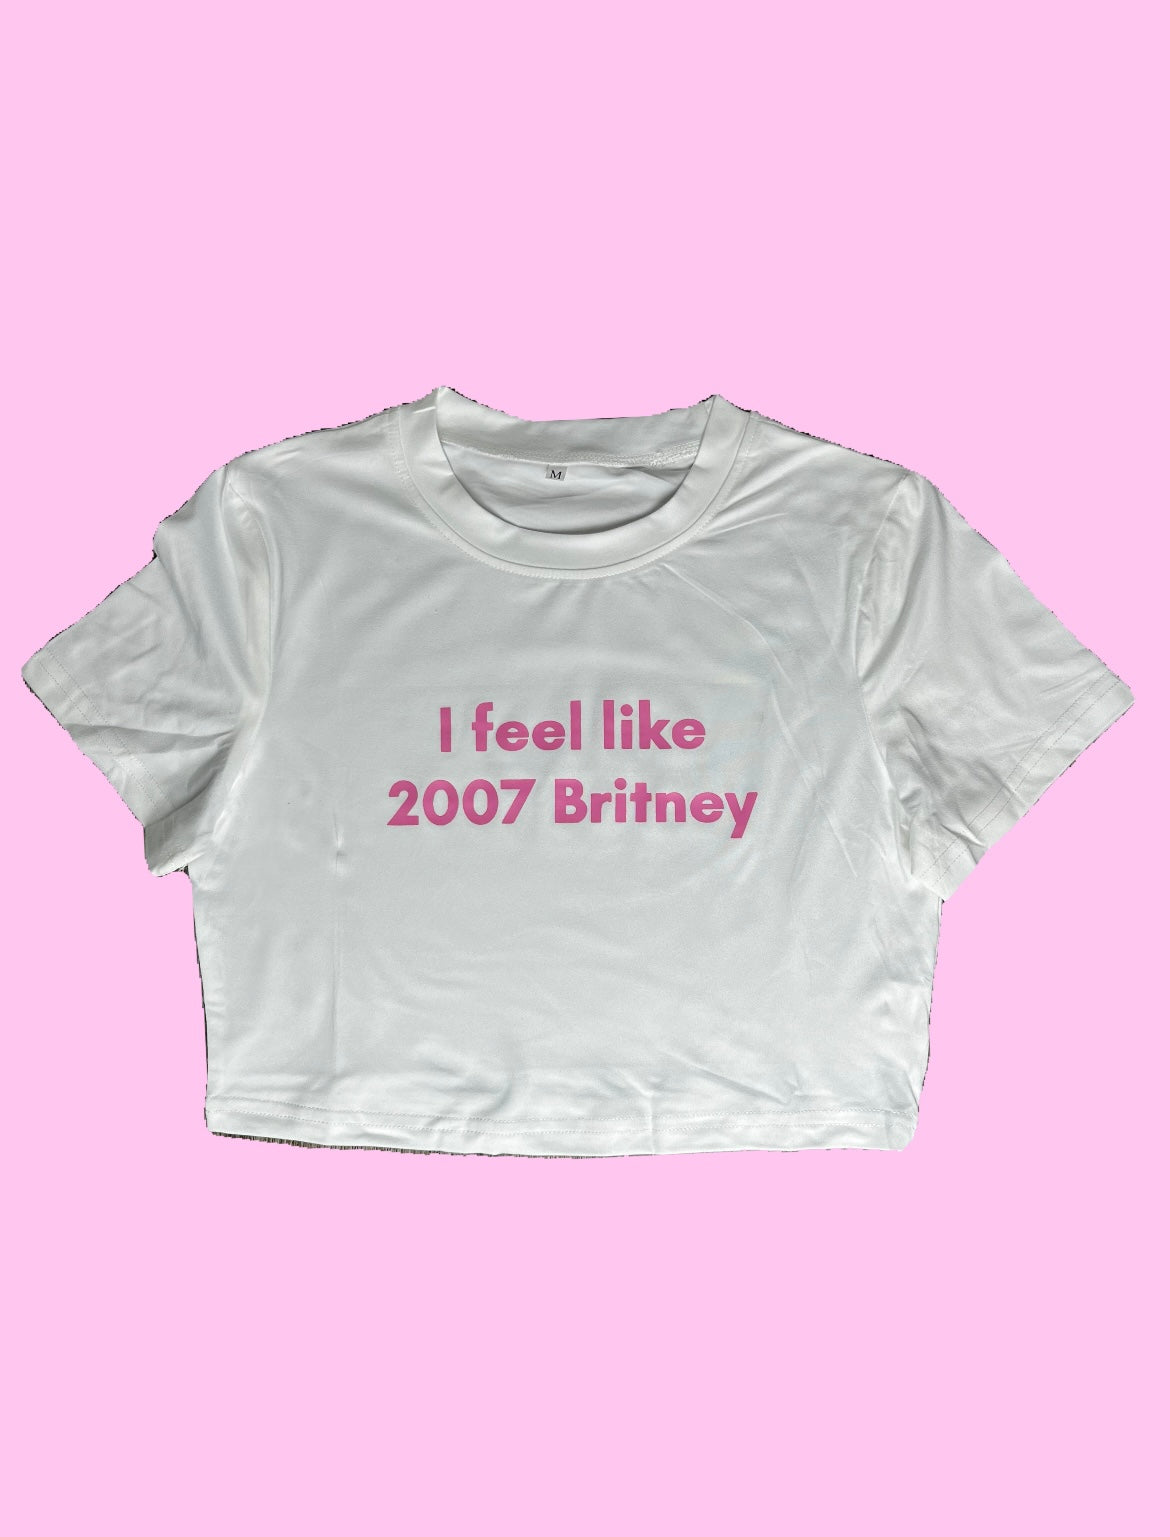 2007 Britney - Crop Tshirt